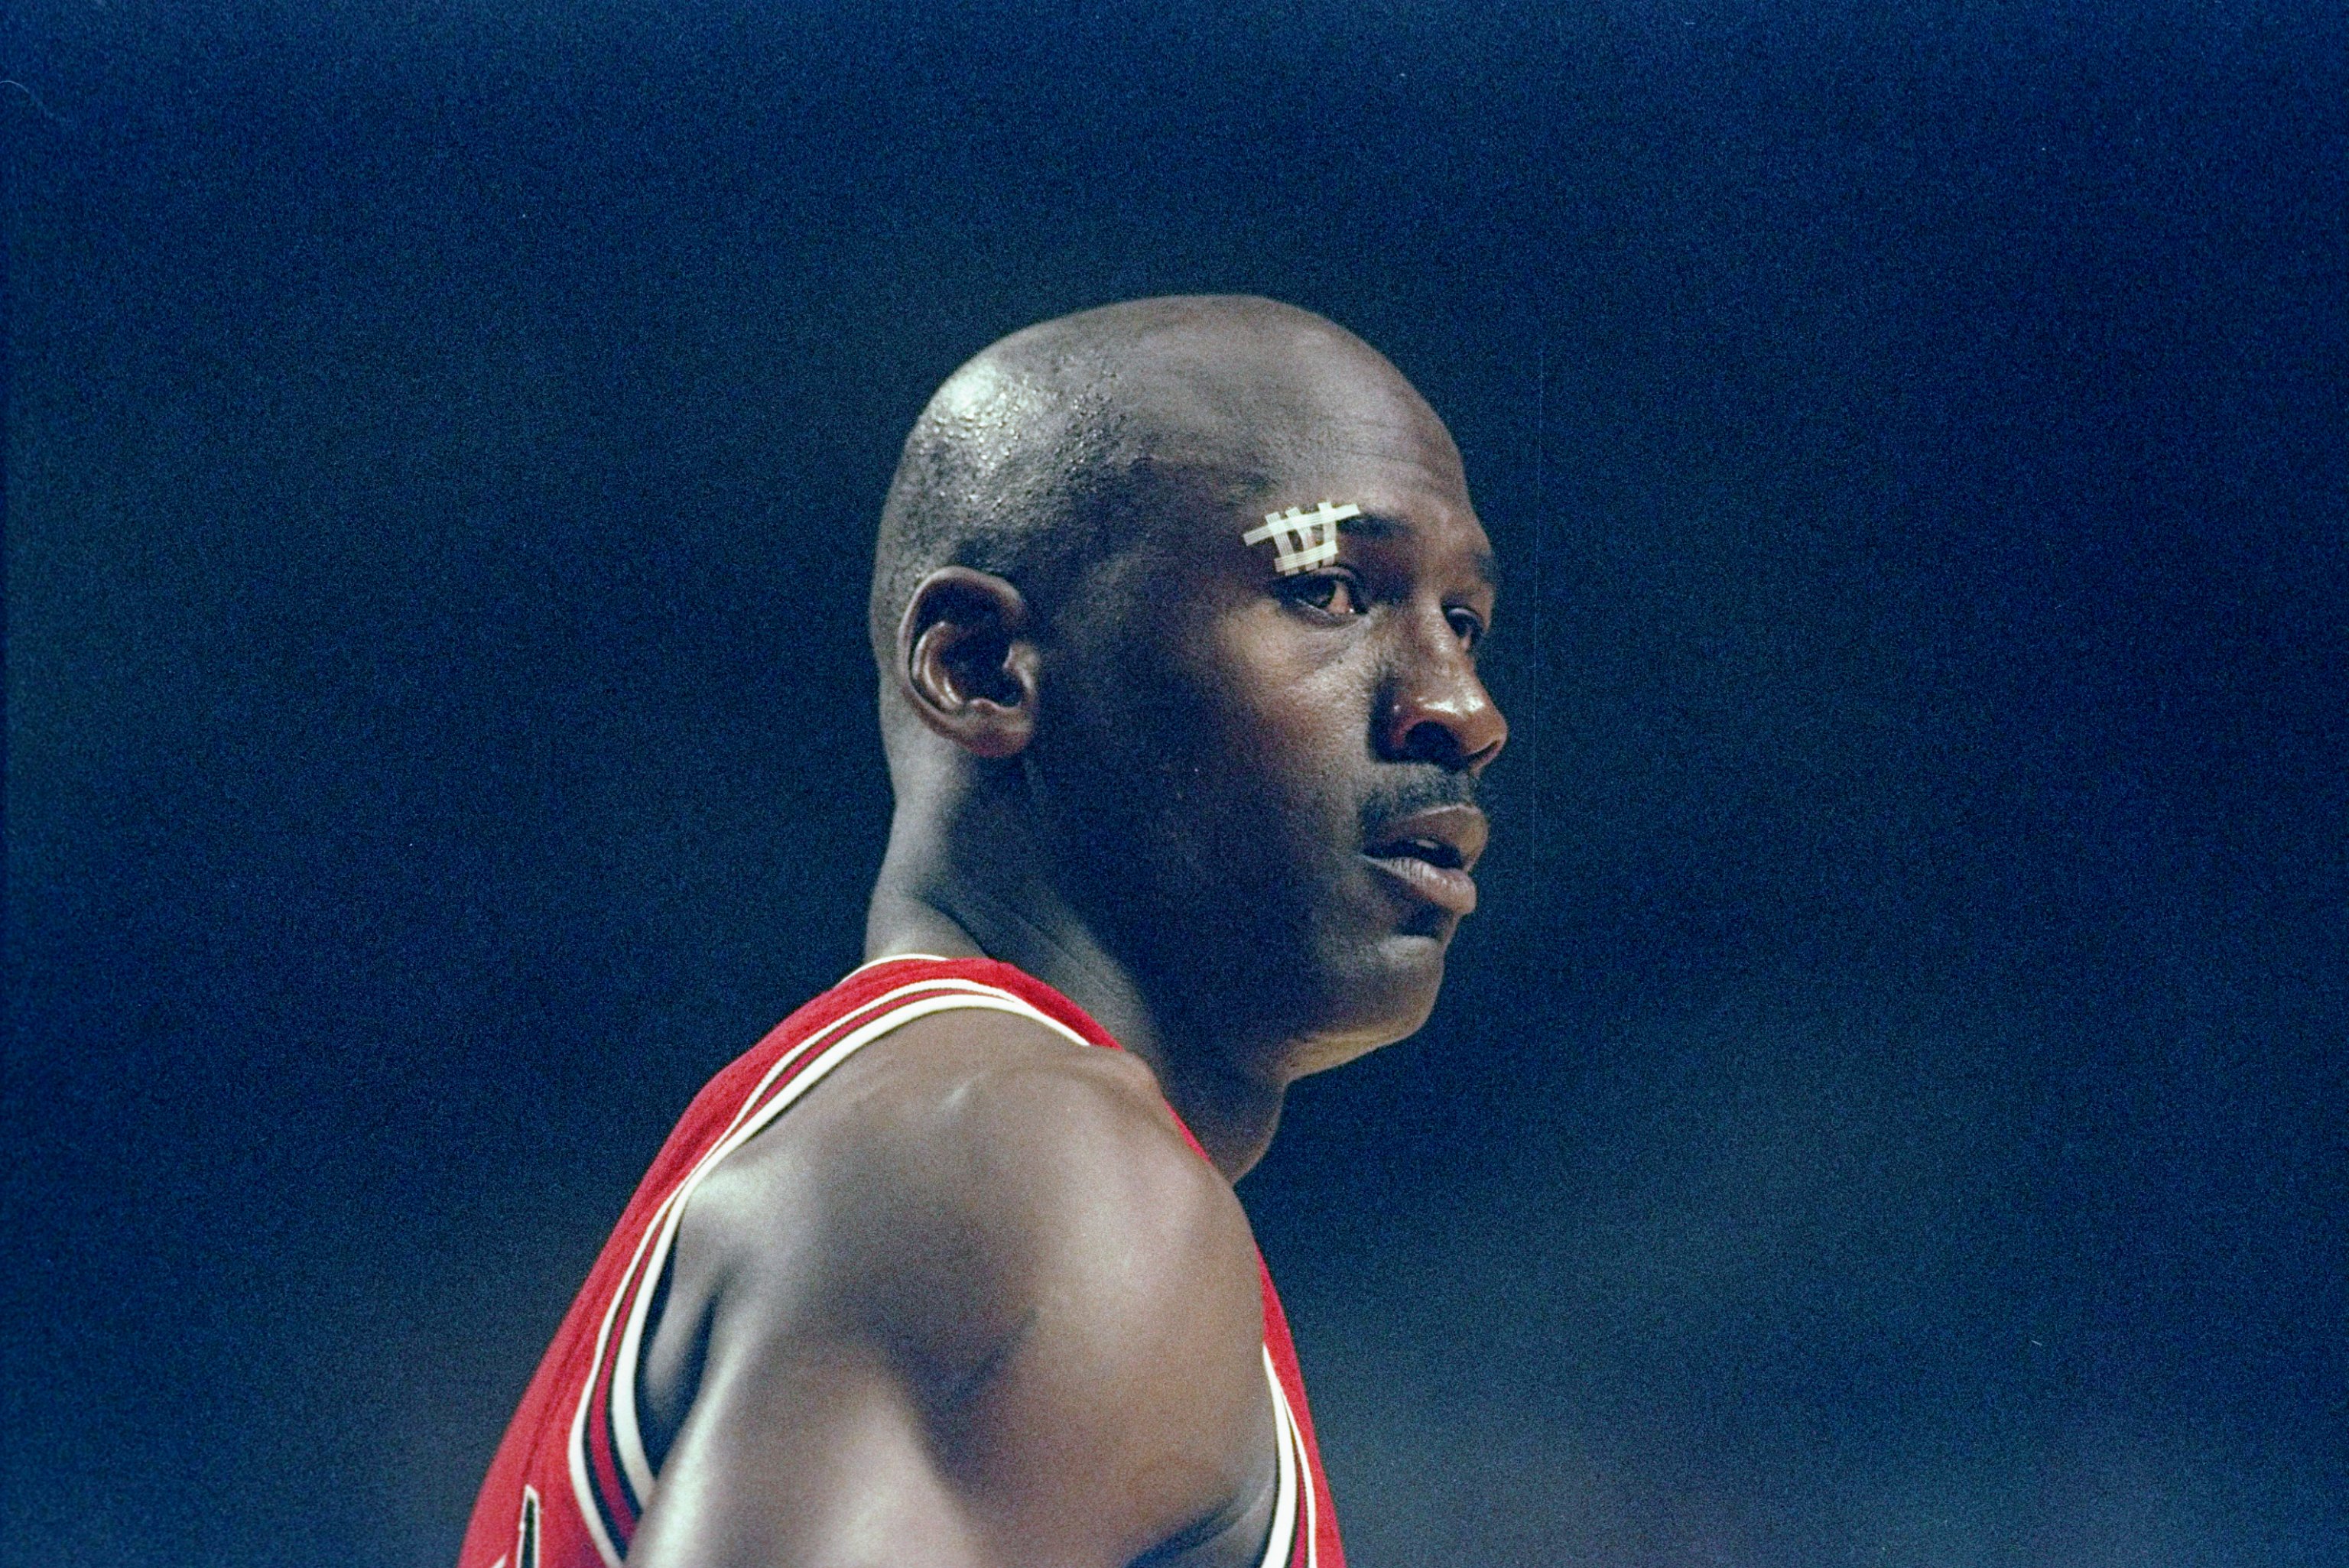 NBA star Michael Jordan takes a breather during a Bulls game